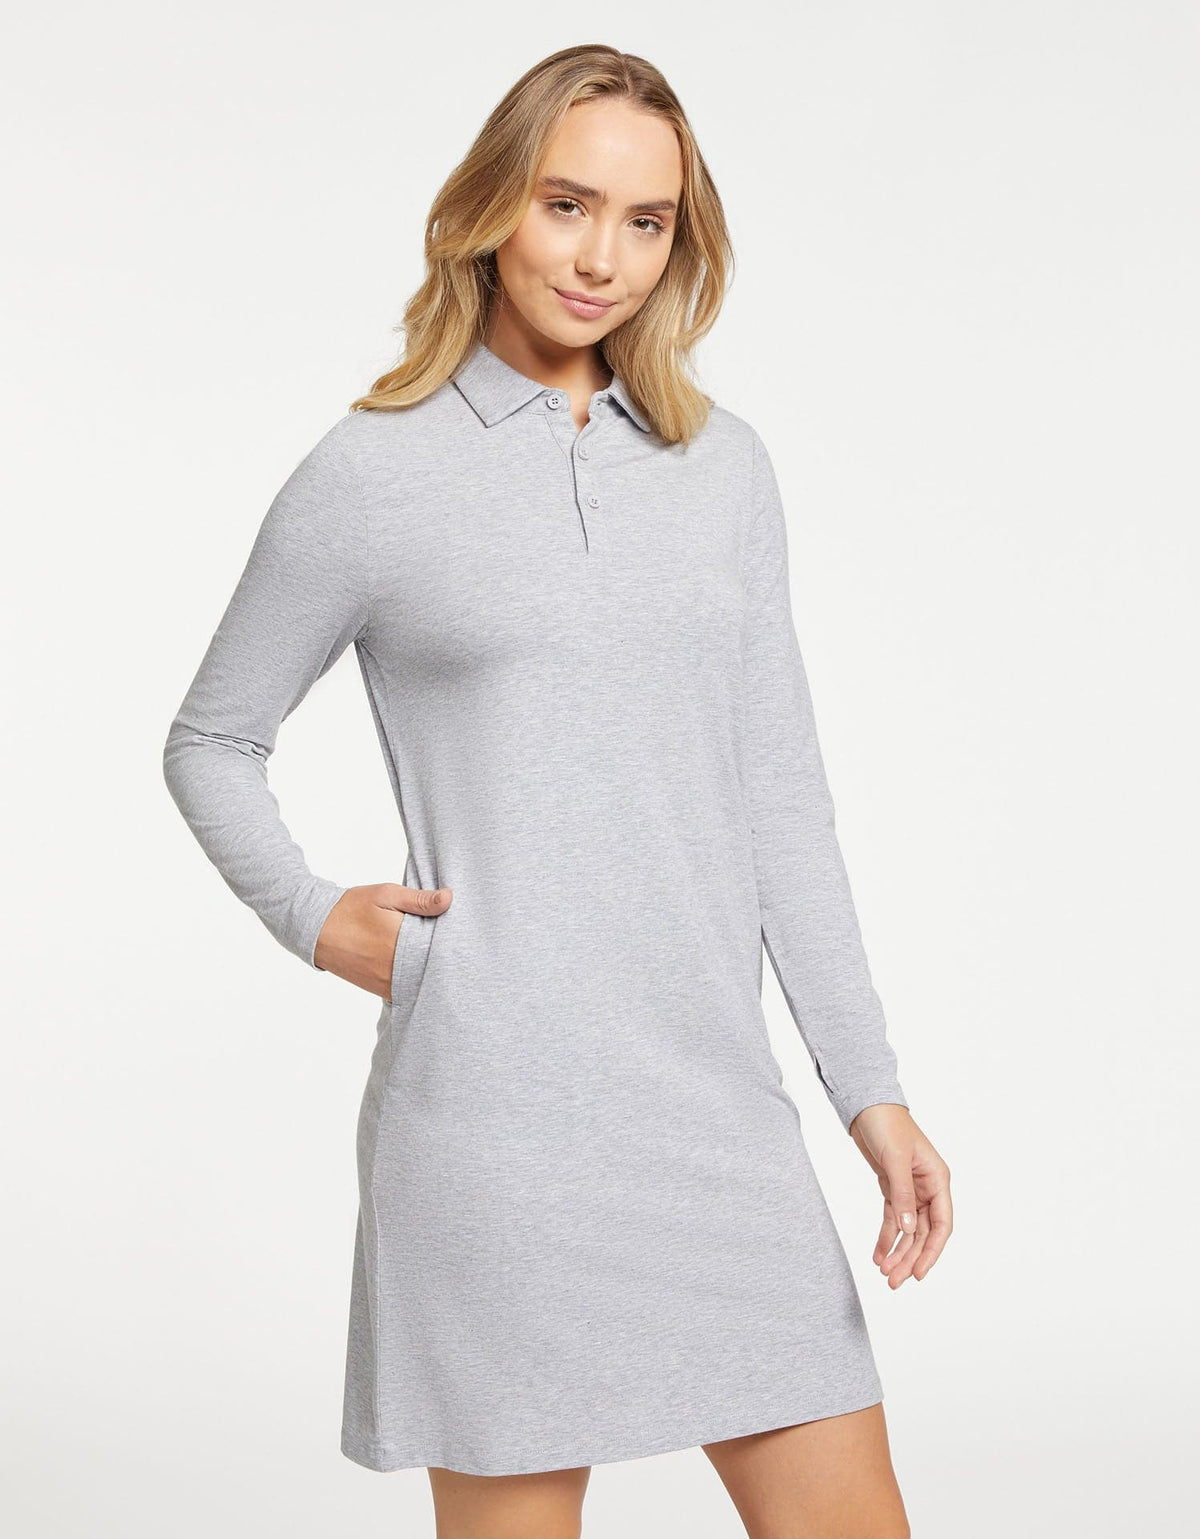 Long Sleeve Polo Dress UPF50+ | Sun Protective Dress for Women ...